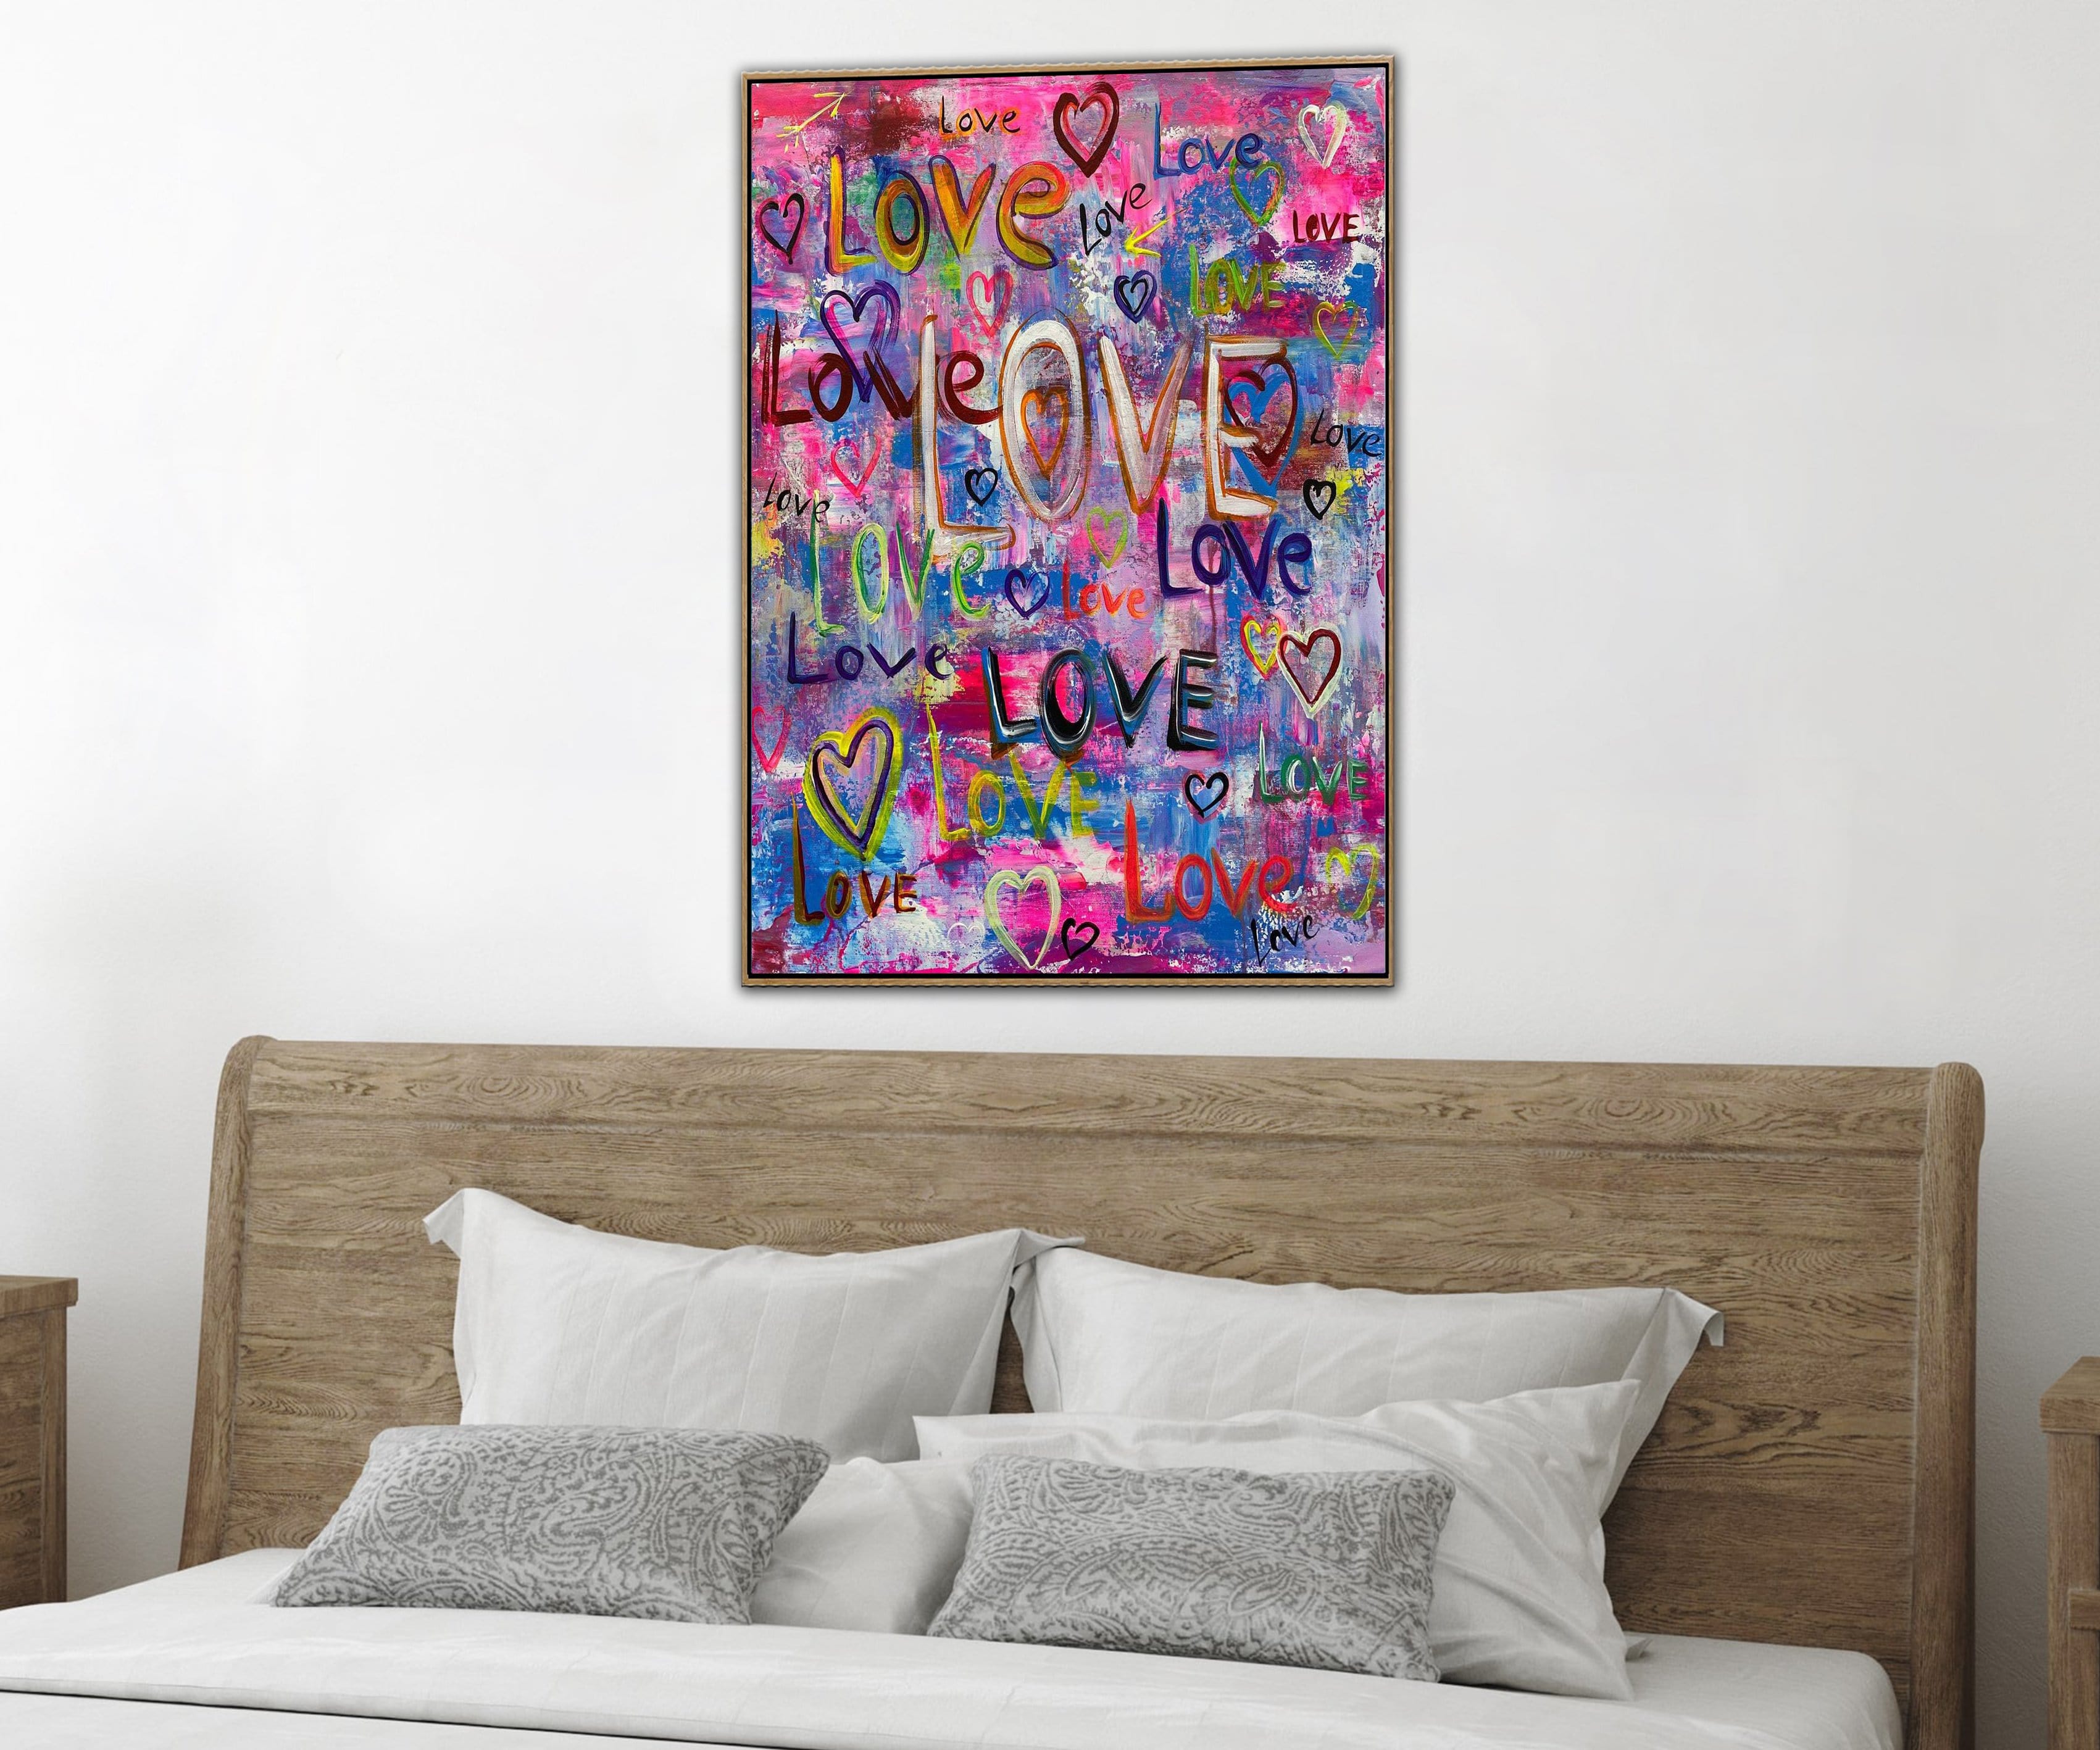 How to hang paintings in bedroom slider2-image-2